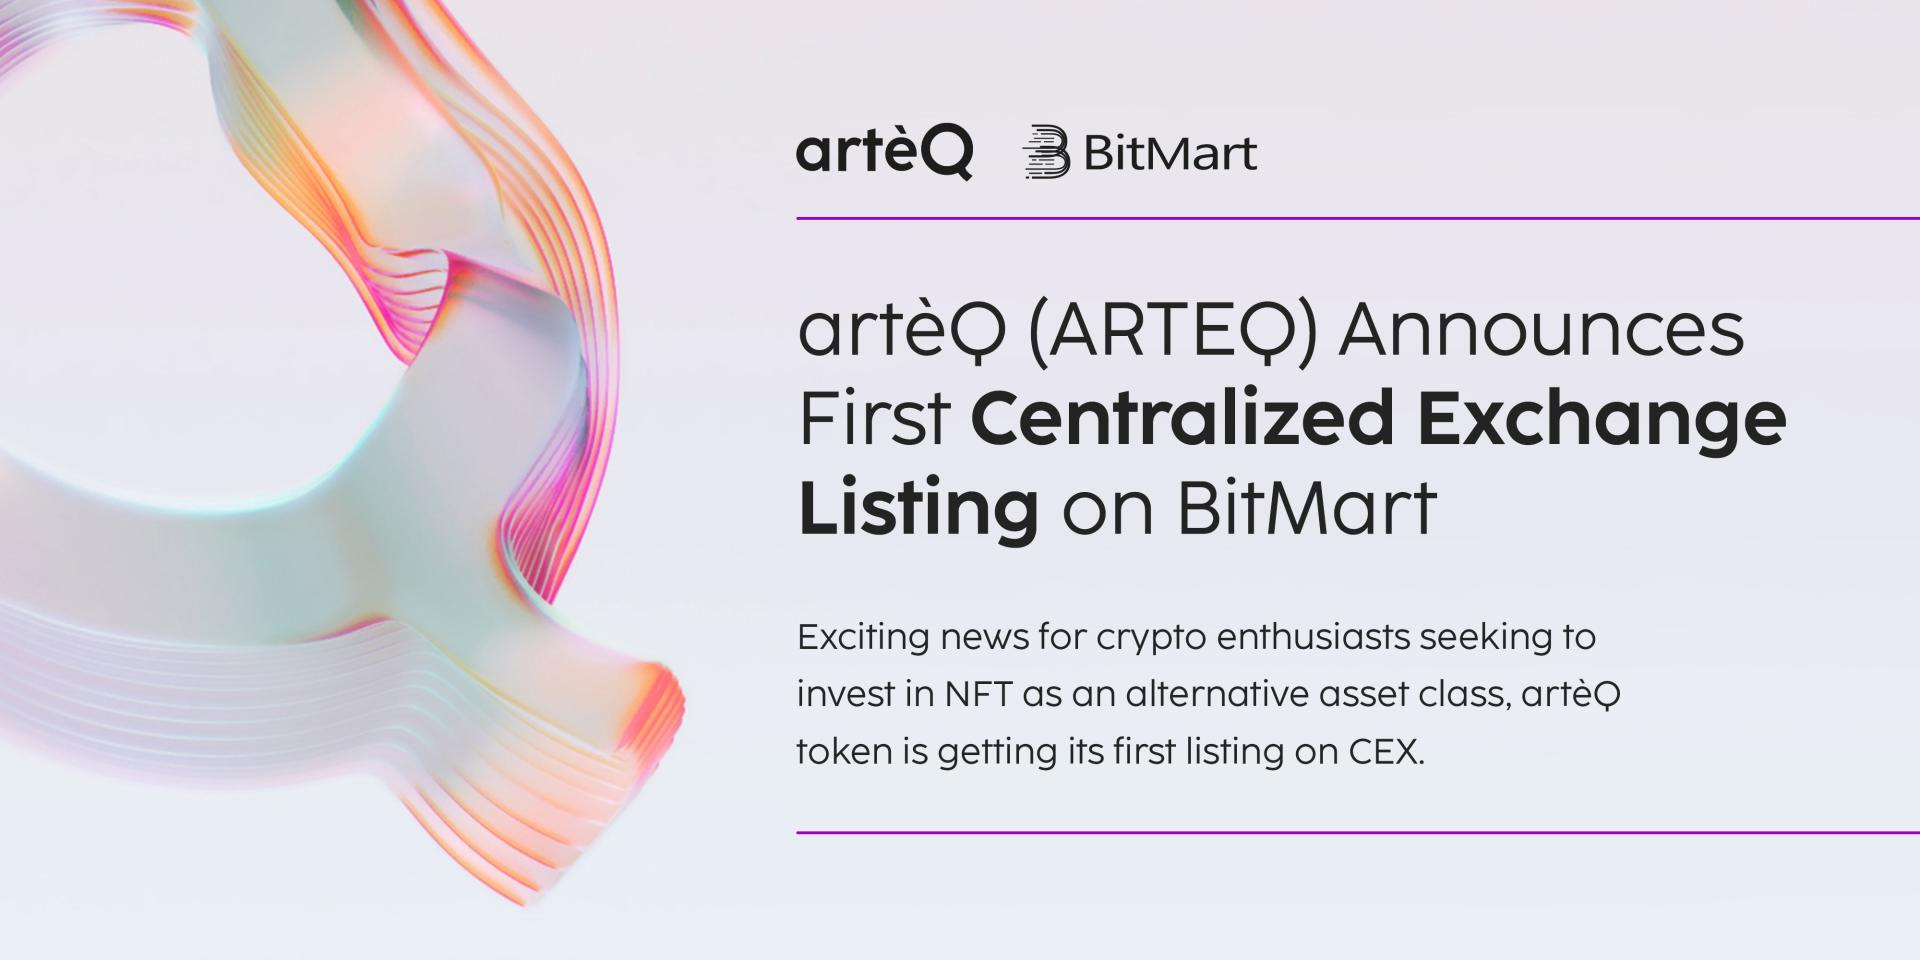 artèQ (ARTEQ) Token Gets First Centralized Exchange Listing on BitMart